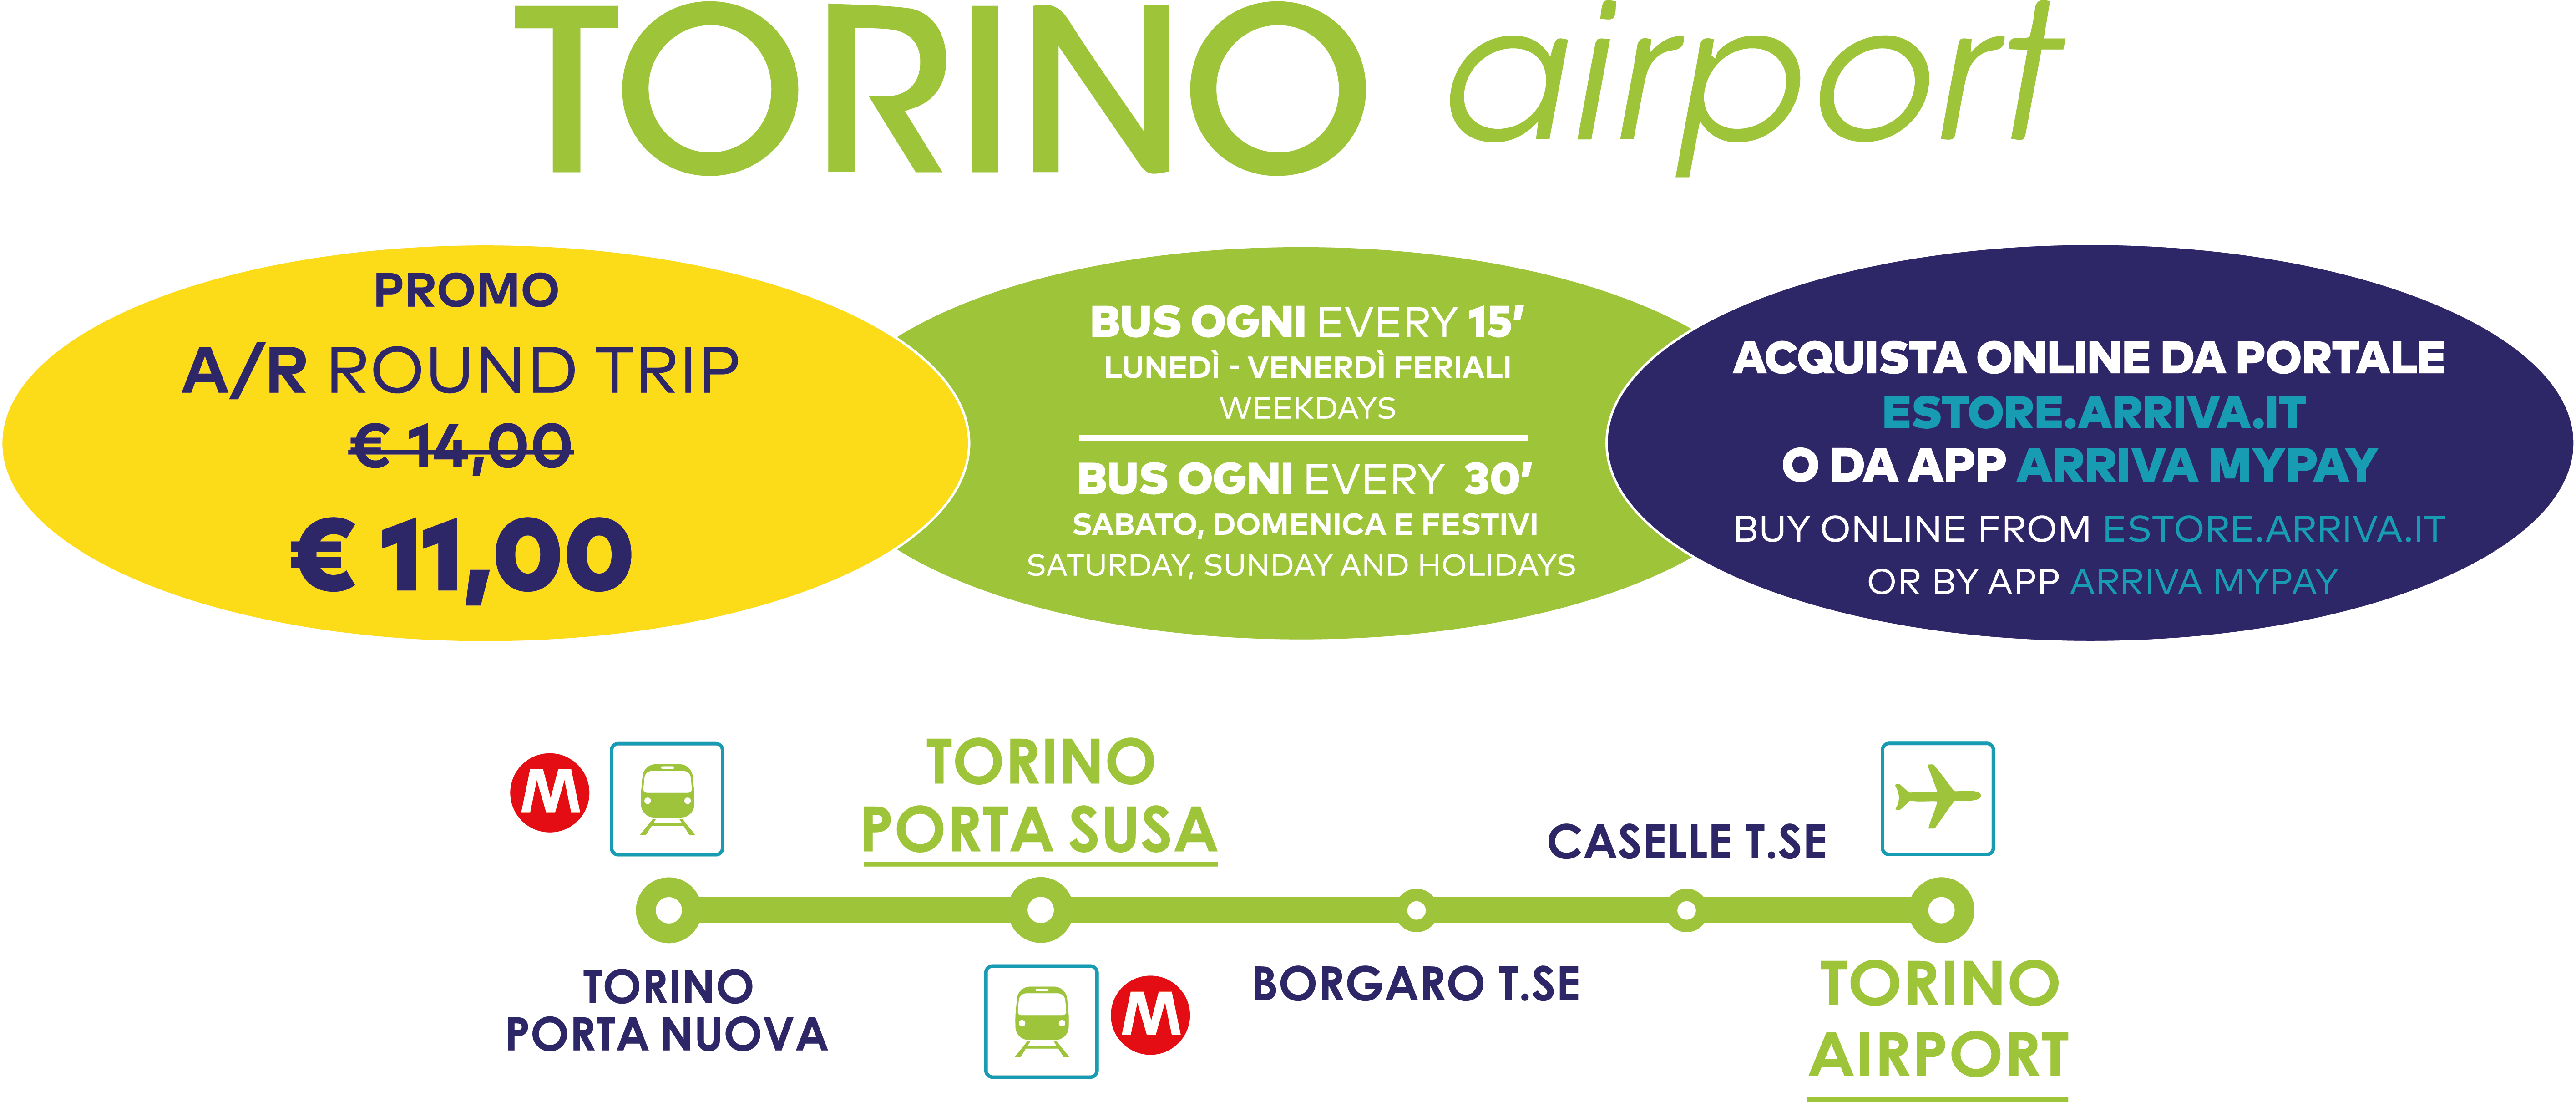 caselle-torino-airport